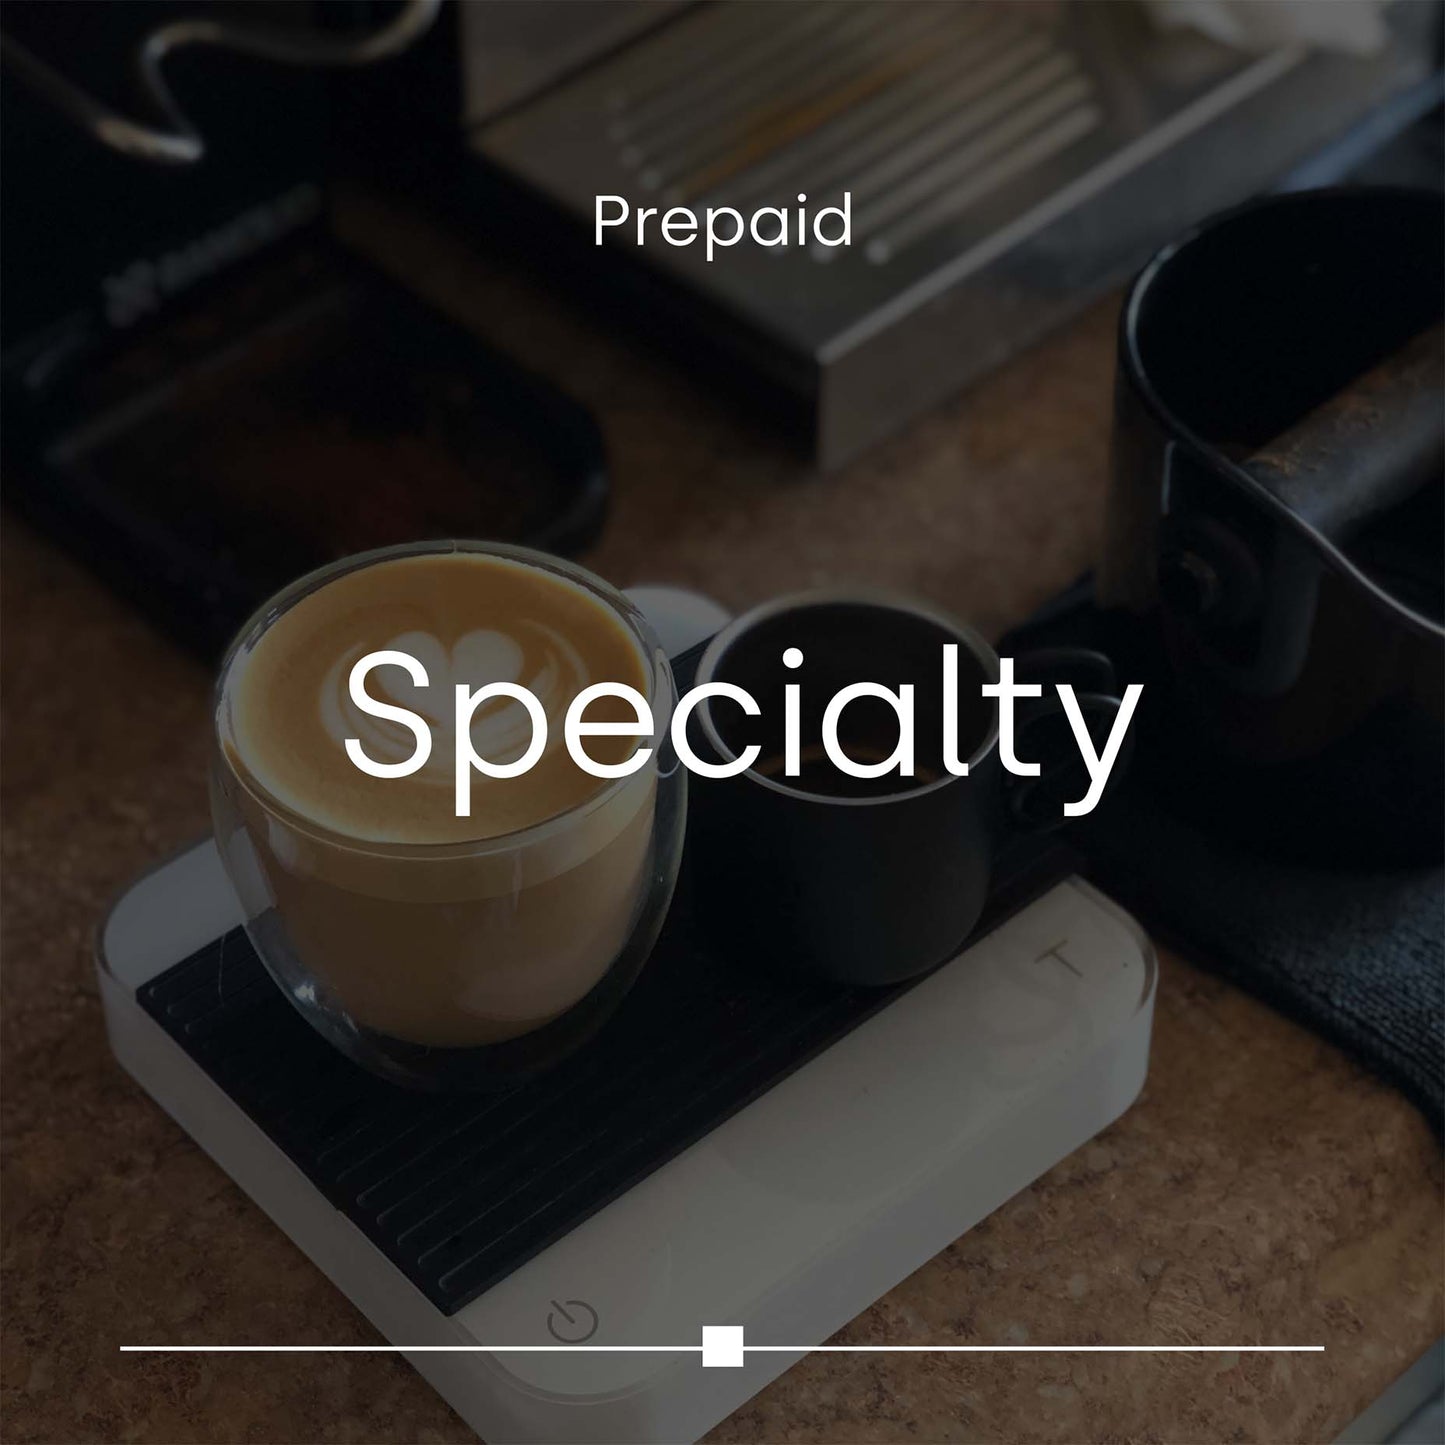 Prepaid Specialty - Espresso Abo - kaffiabo